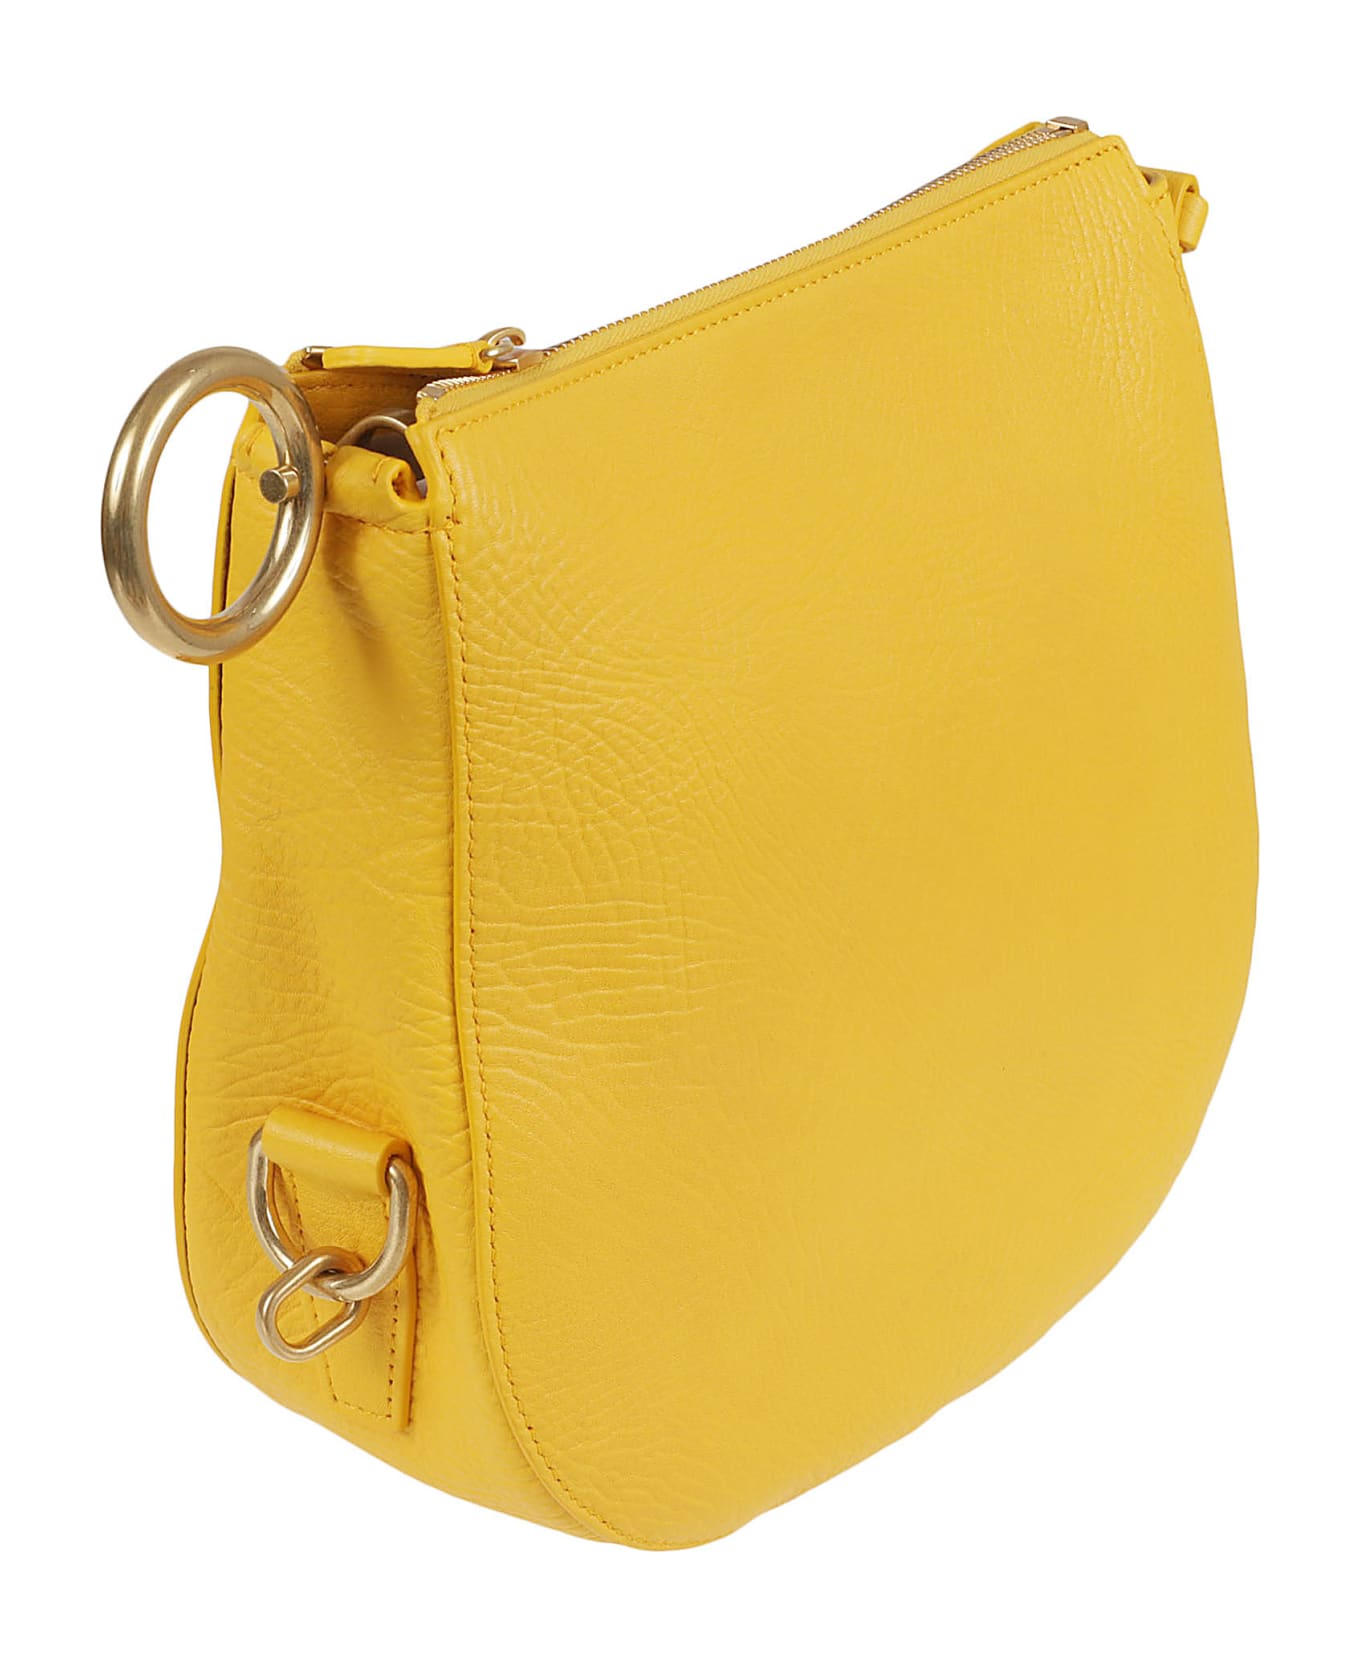 Burberry Knight Lgl Shoulder Bag - Yellow